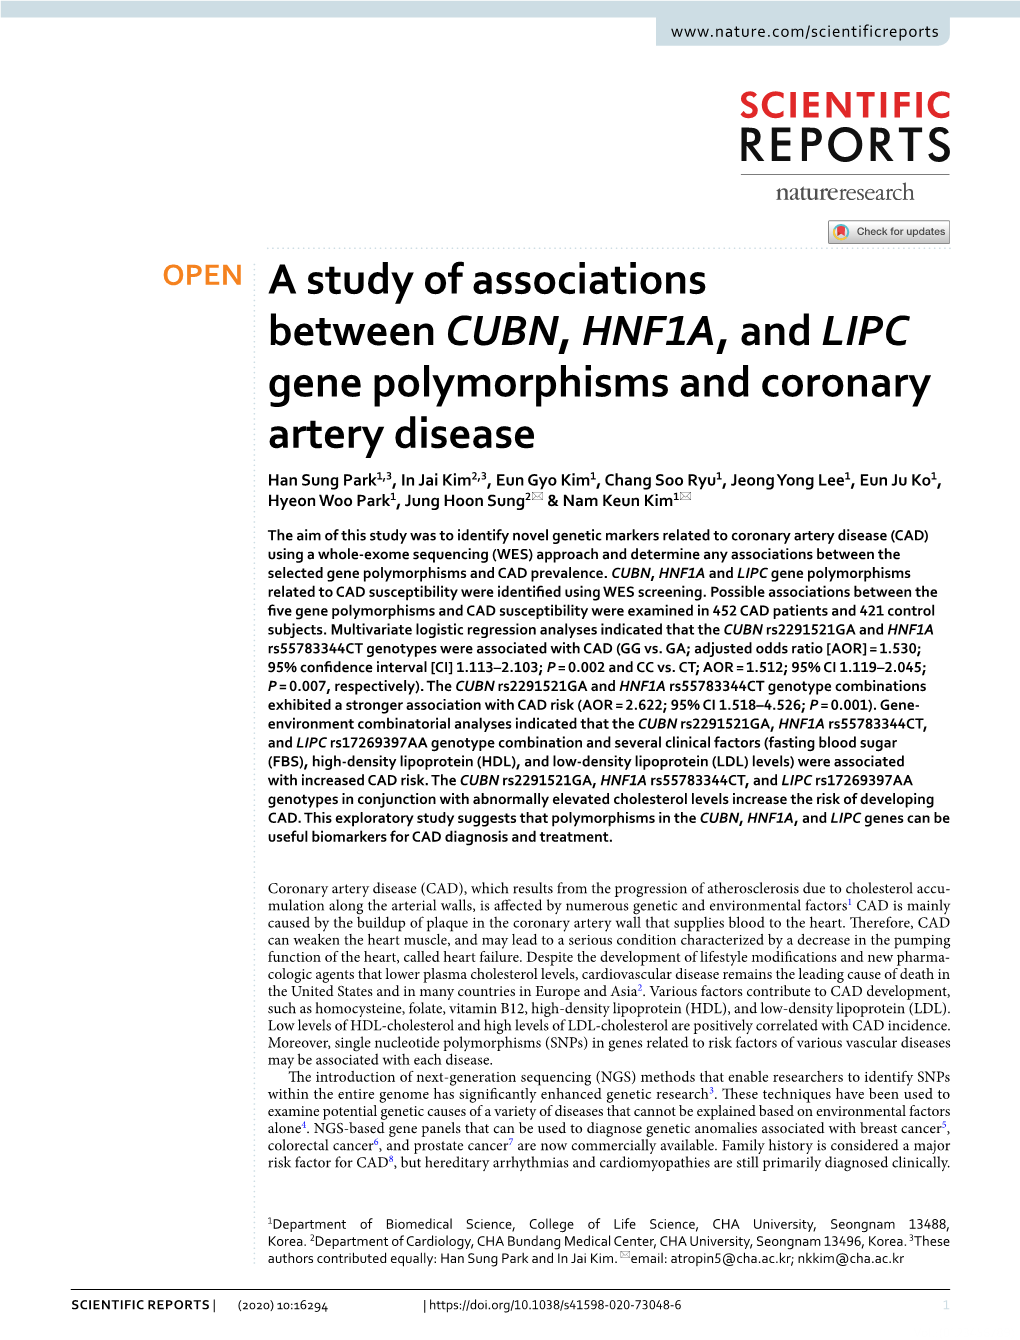 A Study of Associations Between CUBN, HNF1A, and LIPC Gene